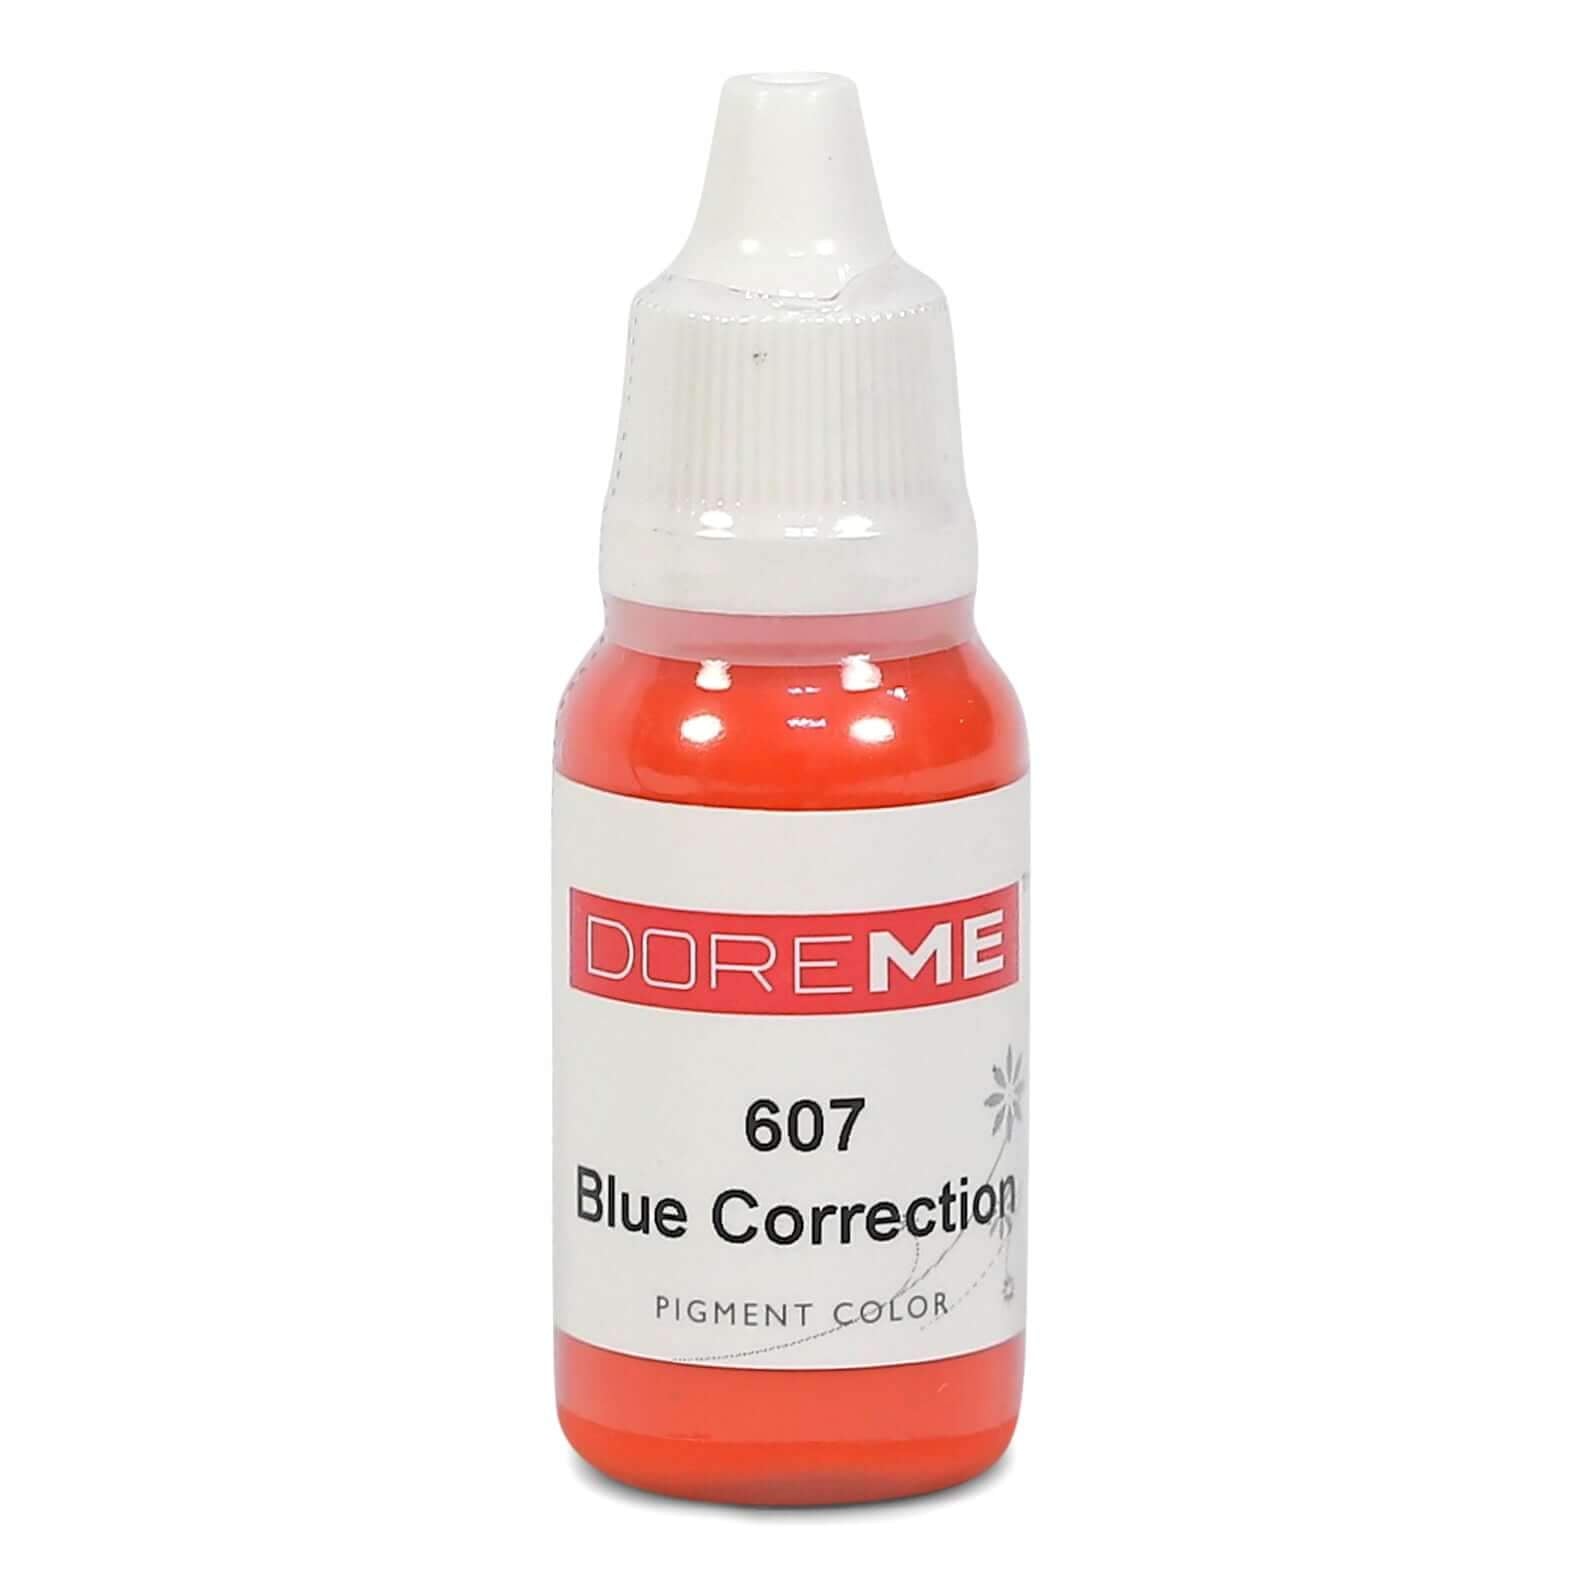 Permanent Makeup pigments Doreme Micropigmentation Correction Colours 607 Blue Correction (w) - Beautiful Ink UK trade and wholesale supplier